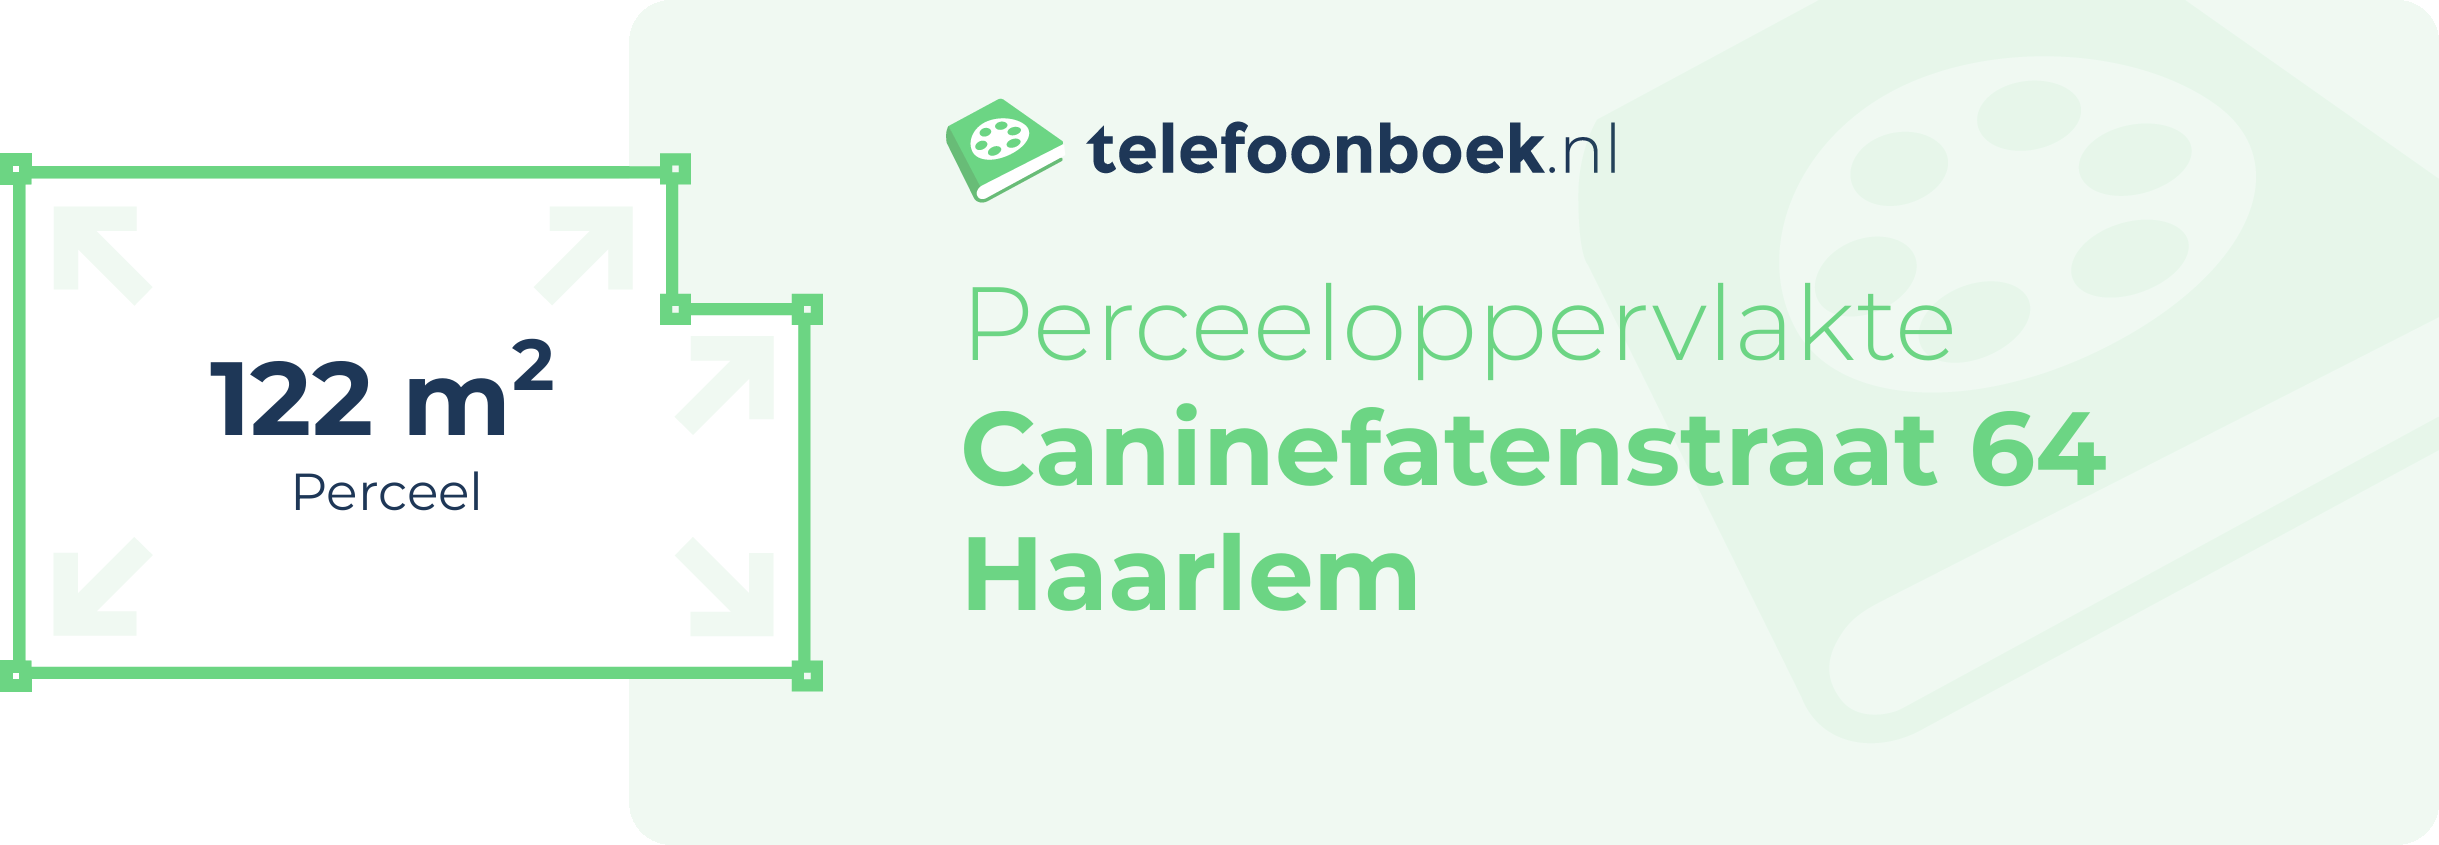 Perceeloppervlakte Caninefatenstraat 64 Haarlem